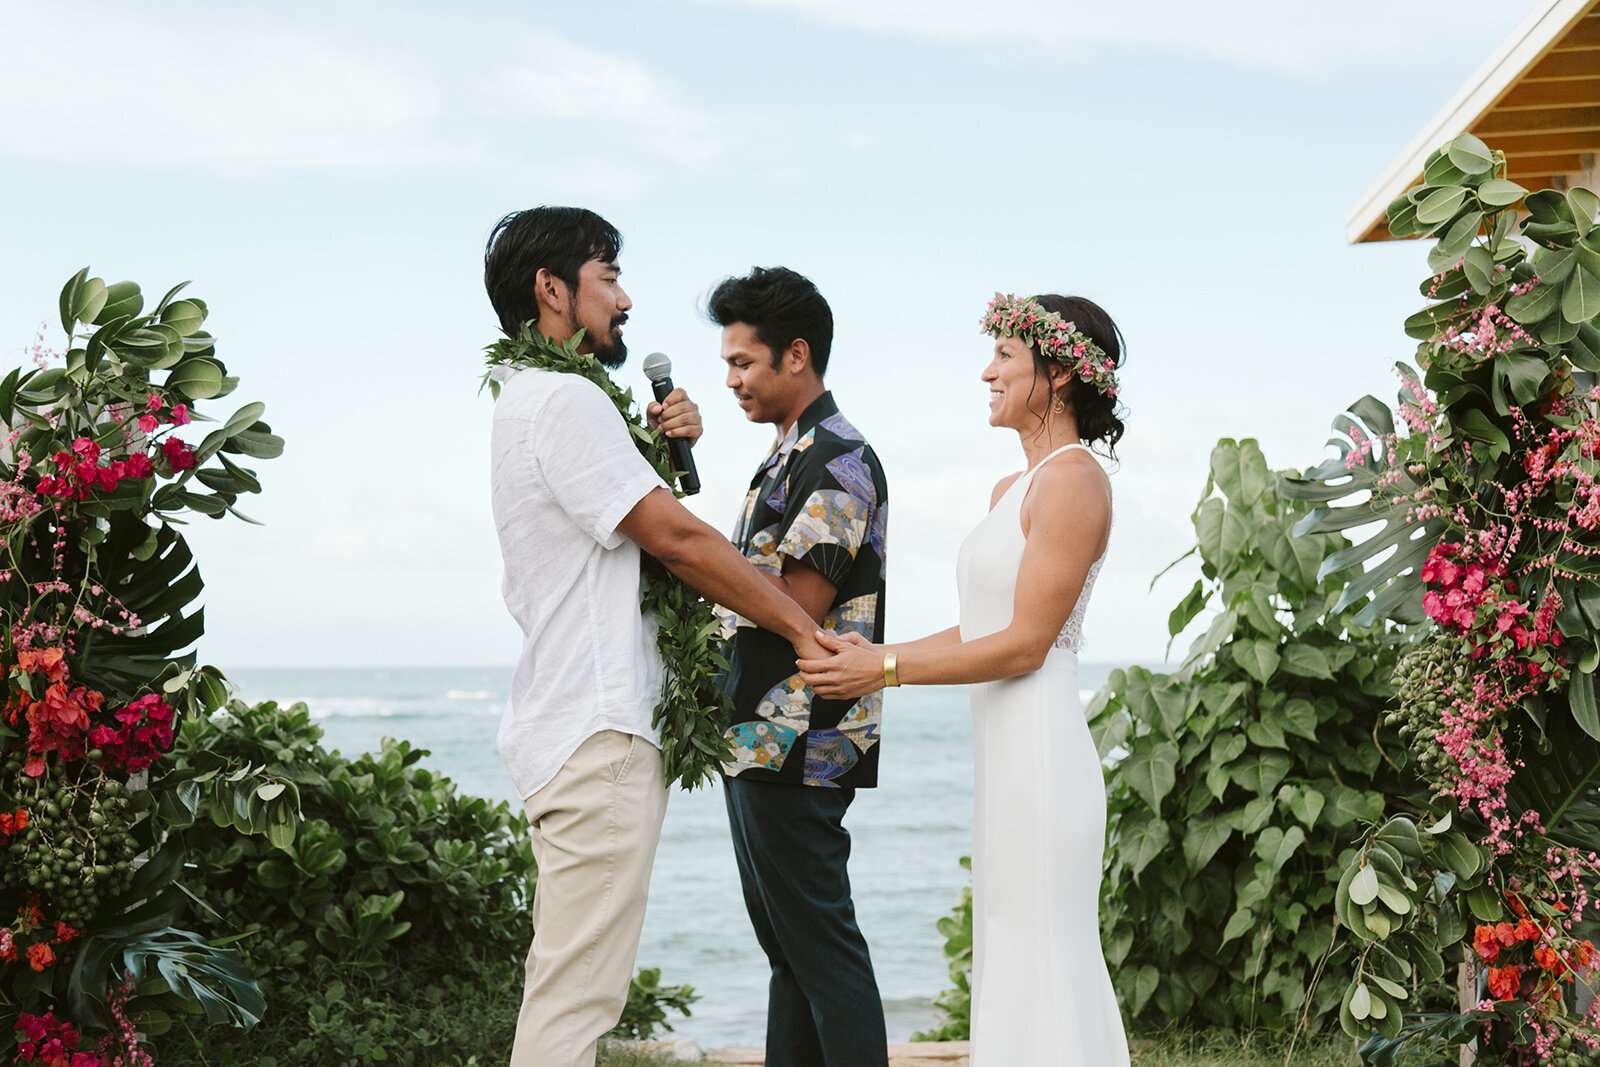 Mokuleia-North-Shore-Hawaii-Beach-House-Wedding-ceremony